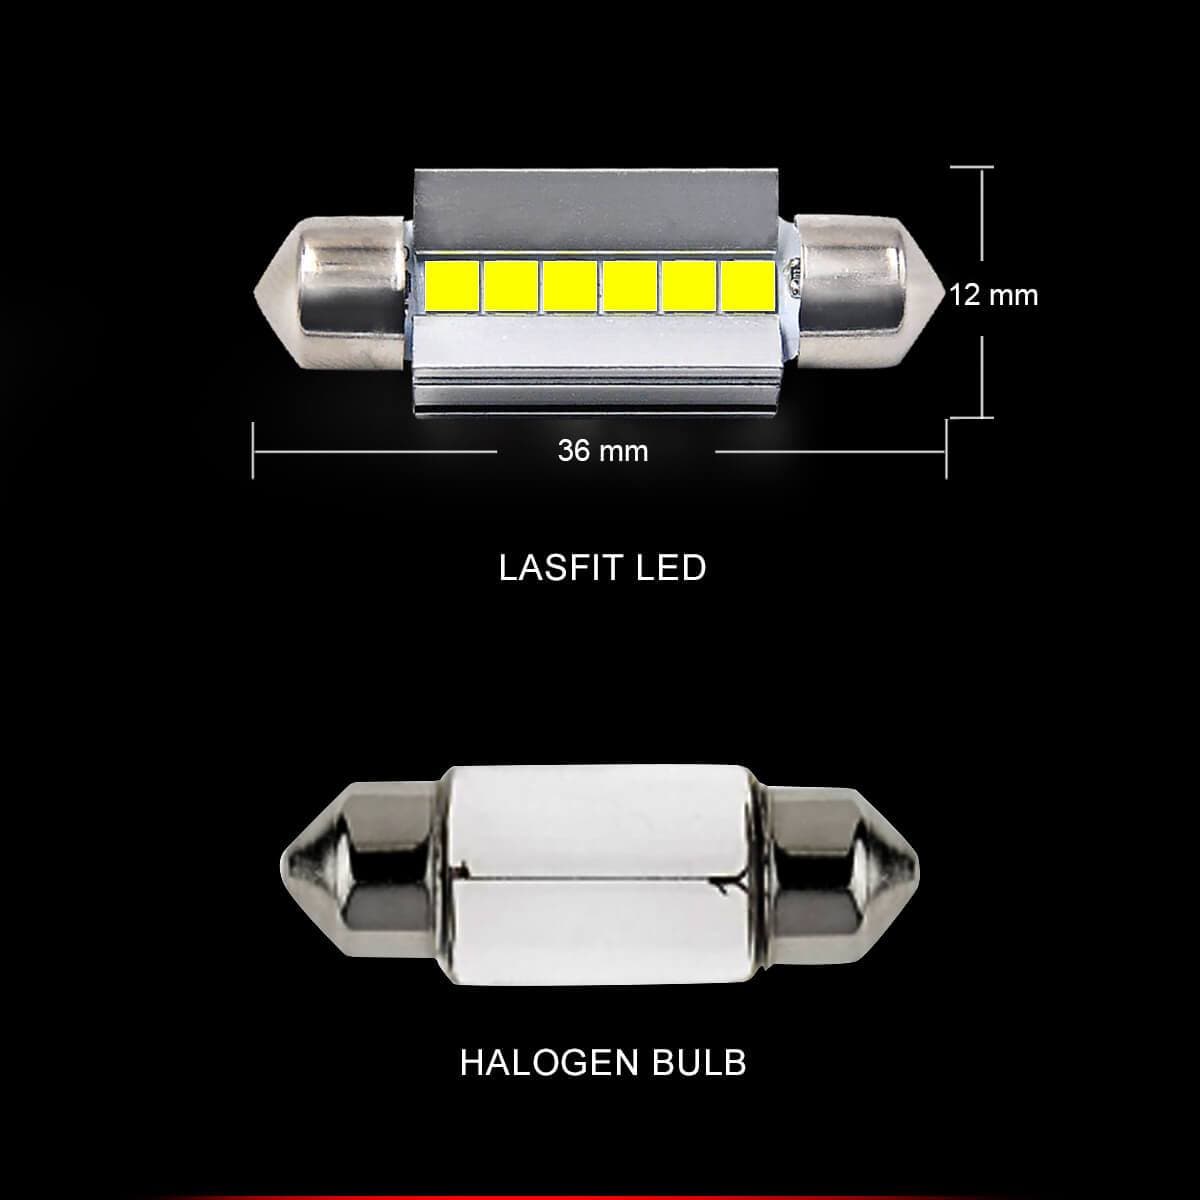 6418 6411 36mm LED Bulb, DE3423 DE3425 LED Festoon Dome Bulb for Car  Interior Dome Map Reading Truck License Plate Light 12V (36MM Warm White)  4PCS